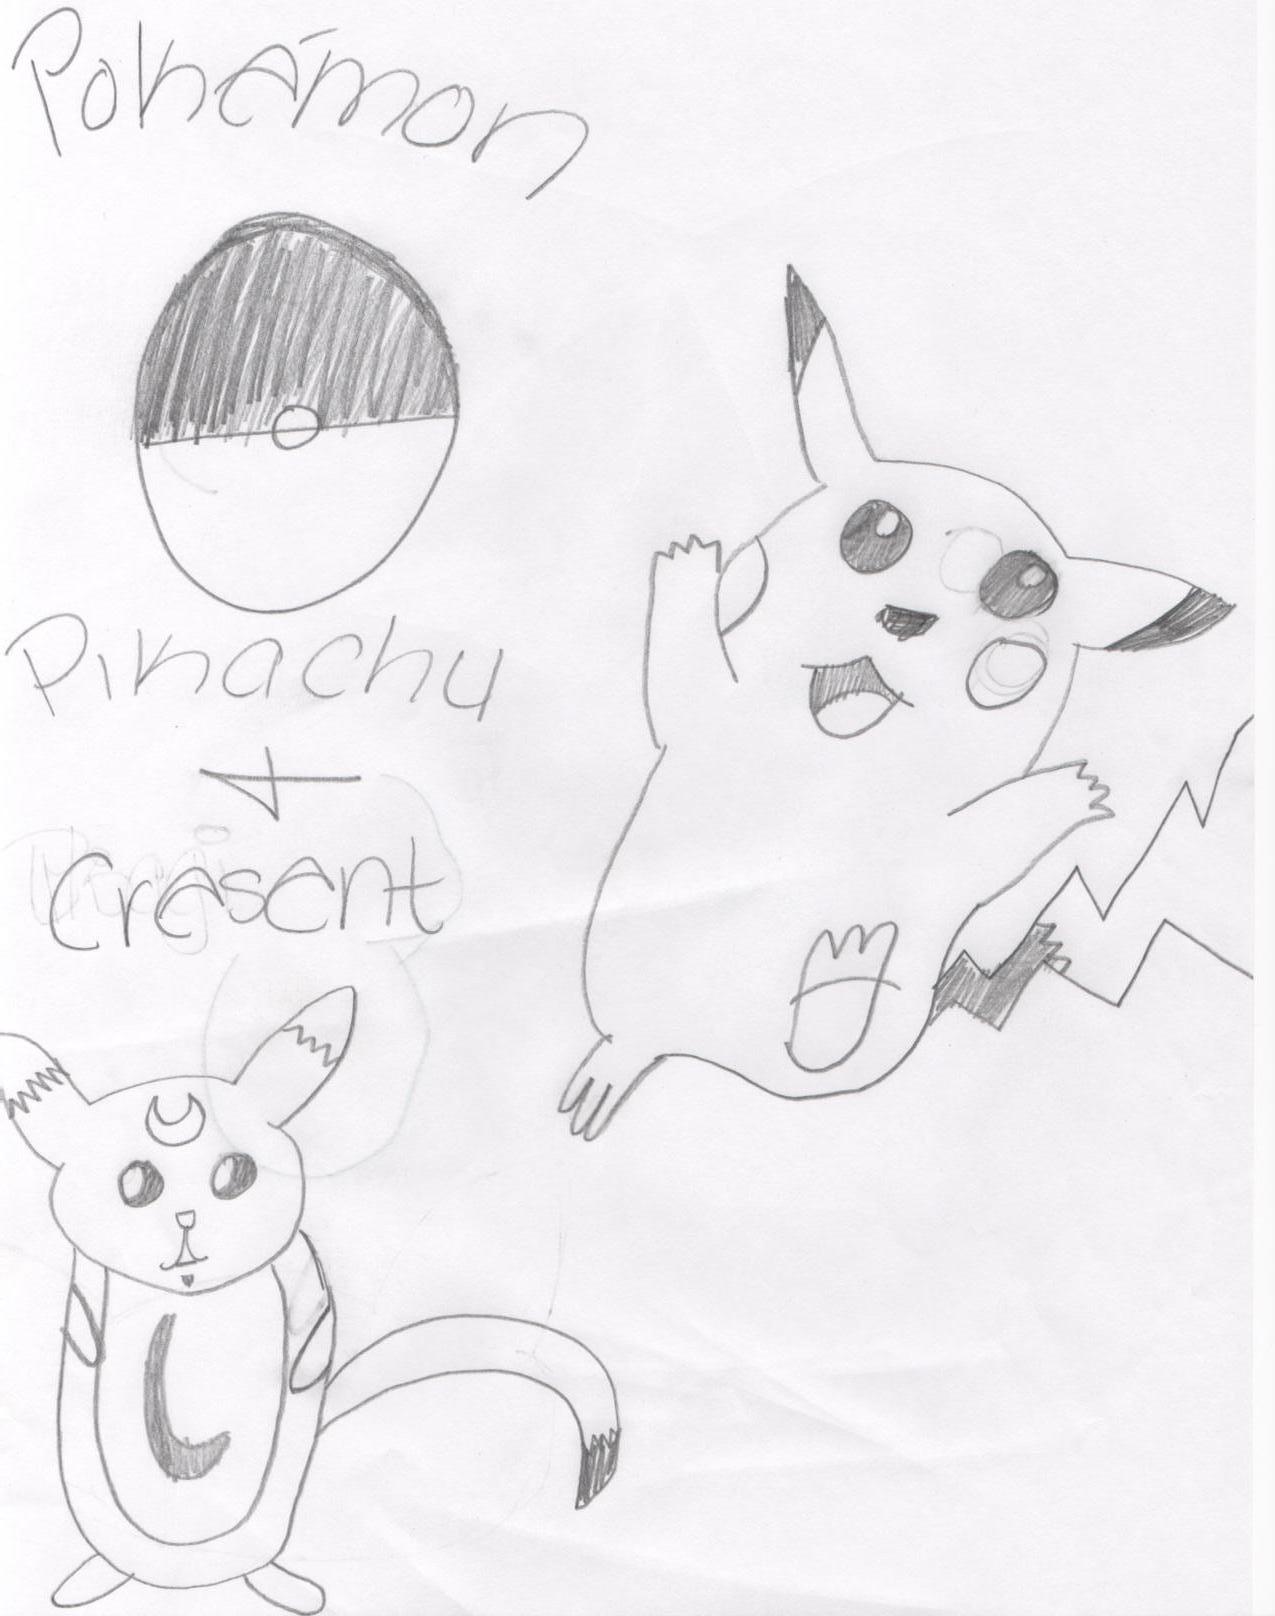 Pikachu and Cresent by Anzu_Yami_4ever